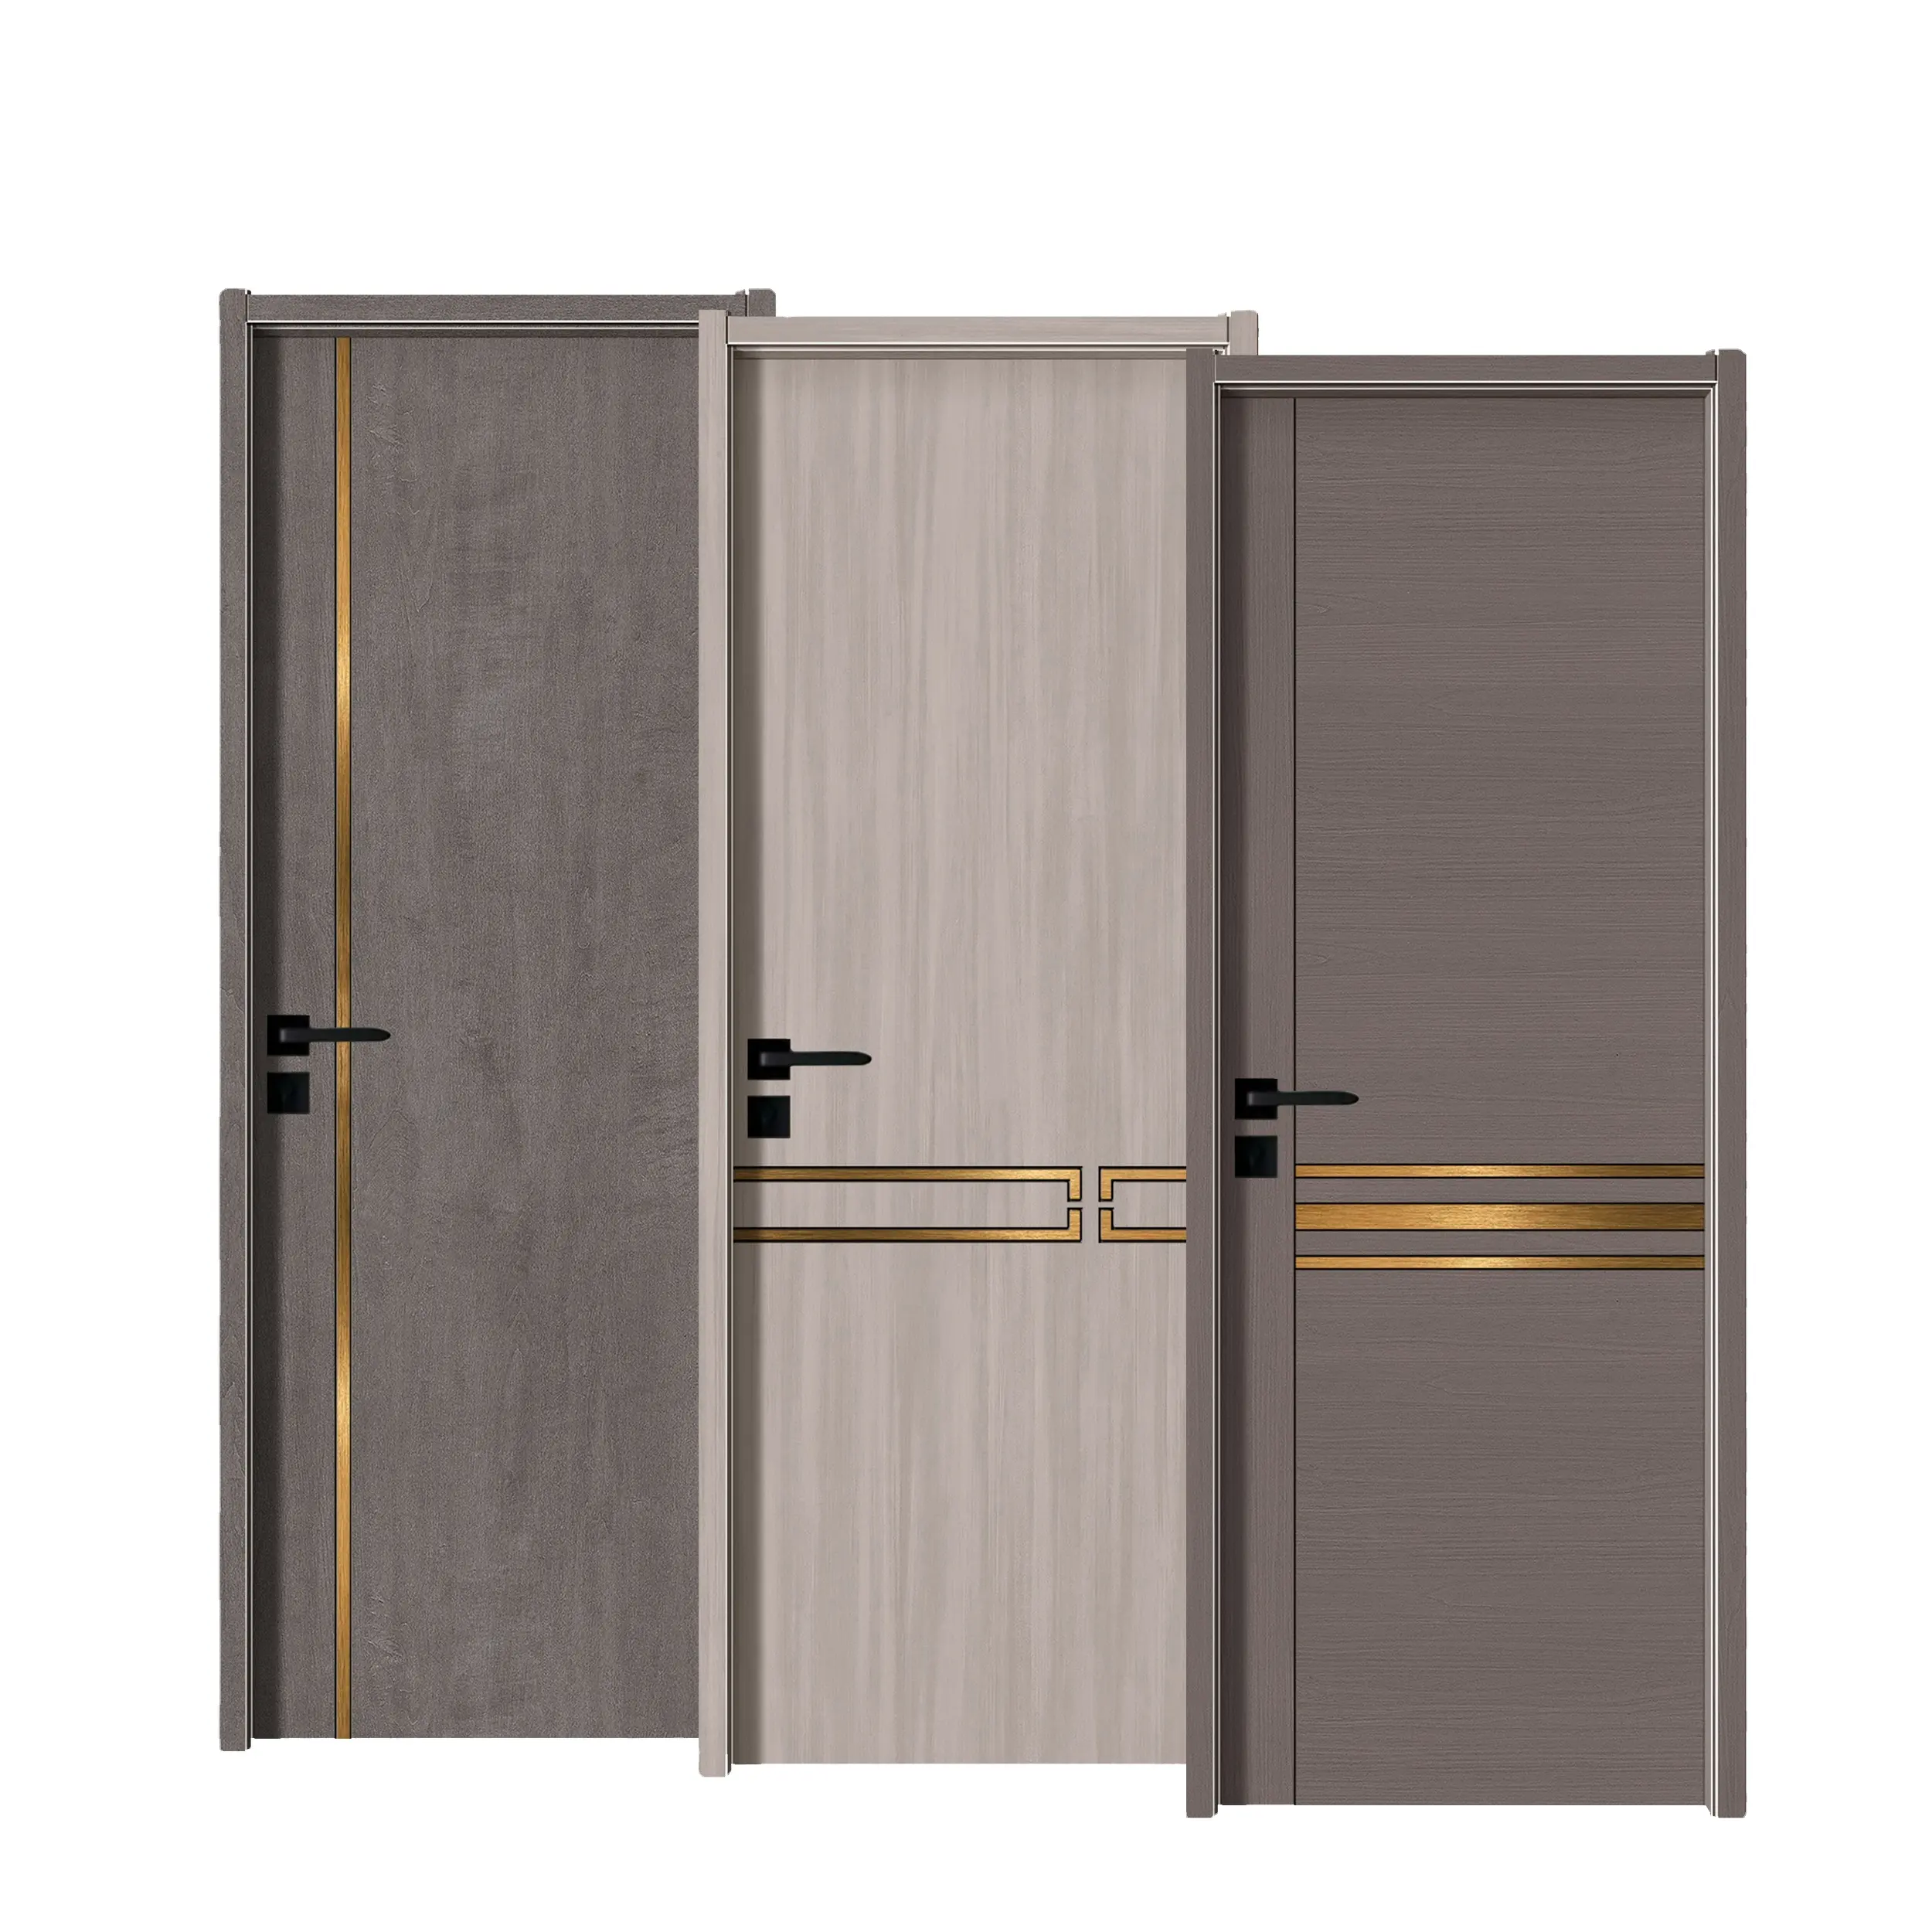 Simple Superior Quality Luxury Design Bathroom Entry Wooden Melamine Finish Door